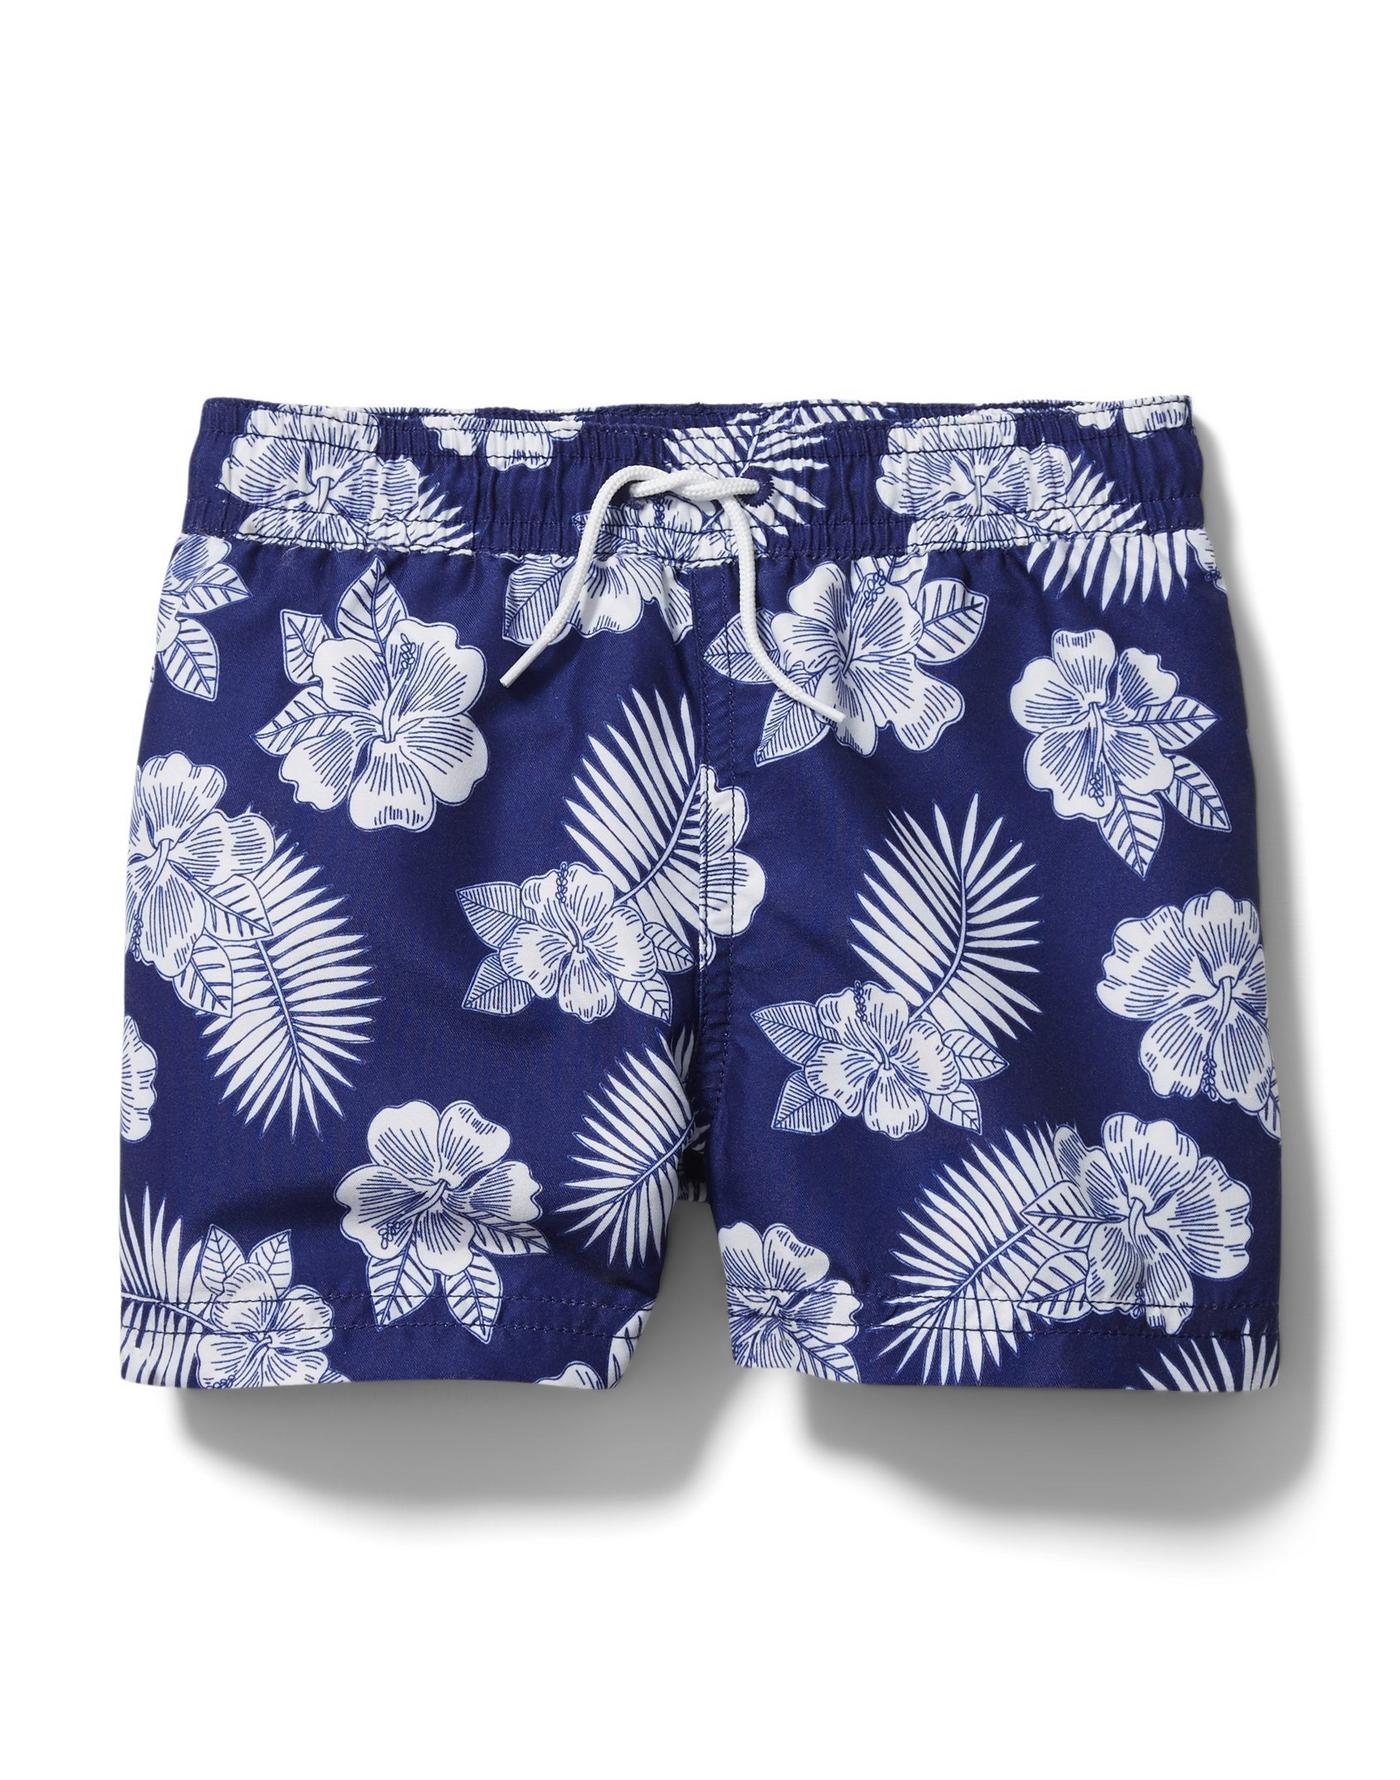 girl and boy matching swimwear, navy blue floral swim trunks